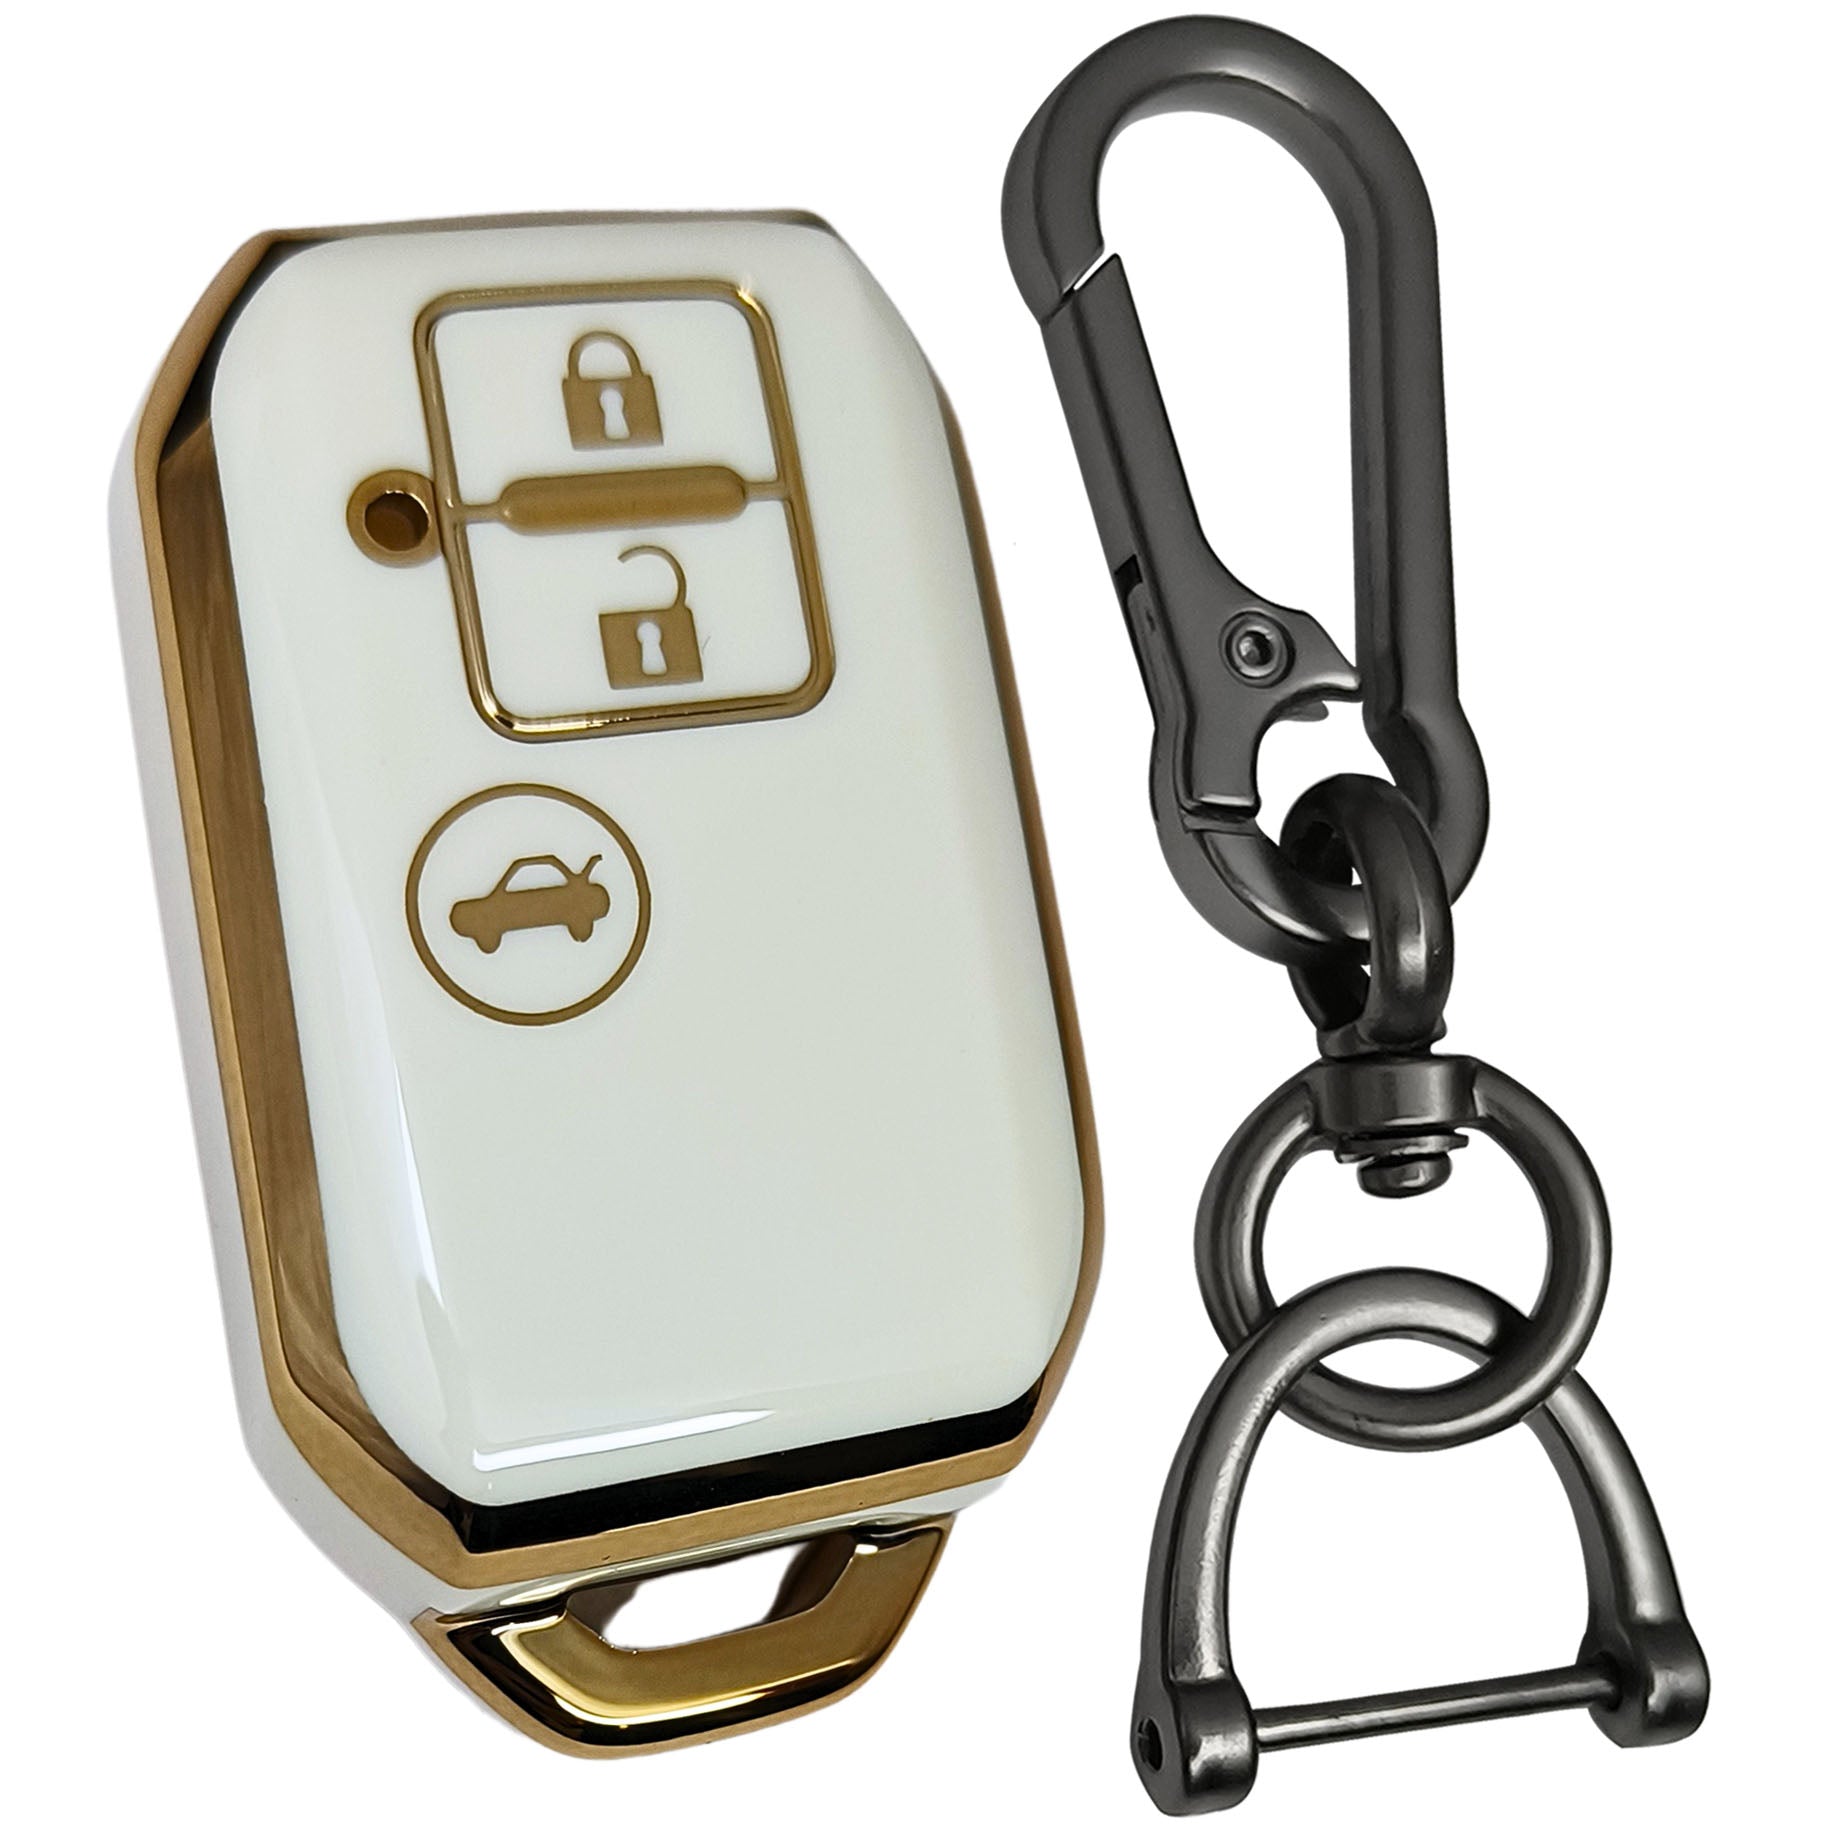 suzuki dzire ertiga swift baleno 3 button smart tpu key cover white key accessories keychain